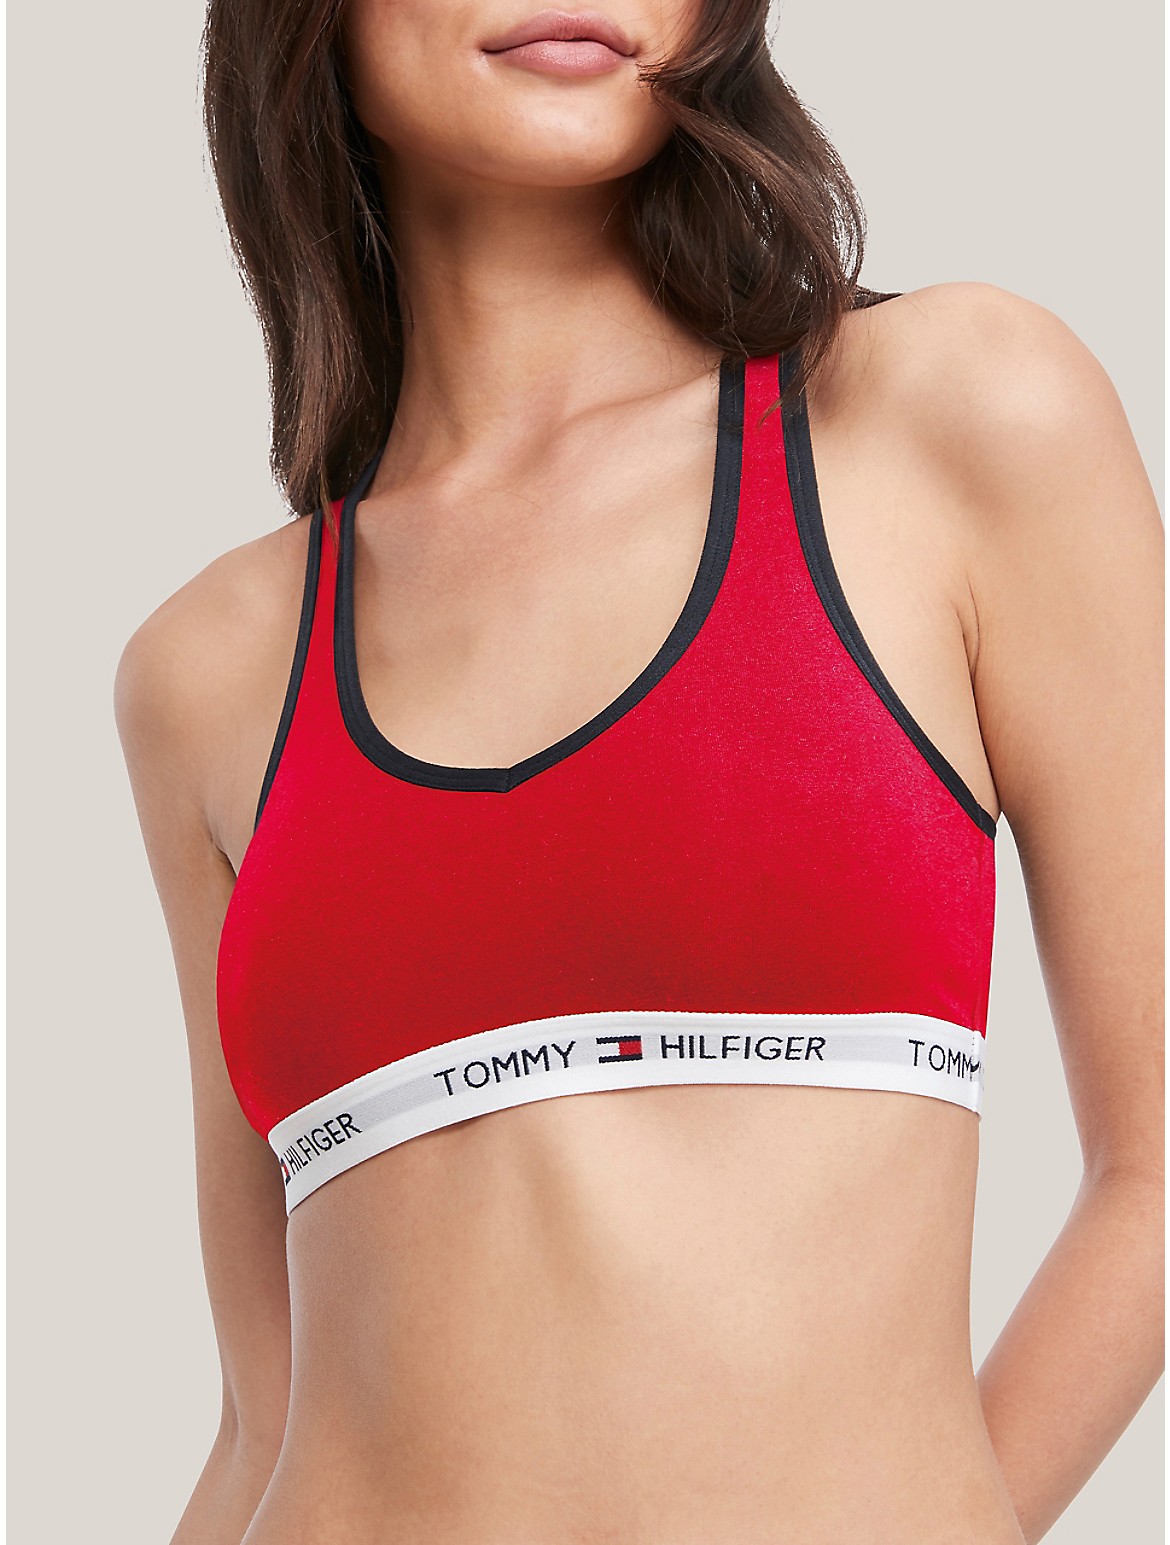 Tommy Hilfiger Women's Tommy Logo Bralette - Red - XL